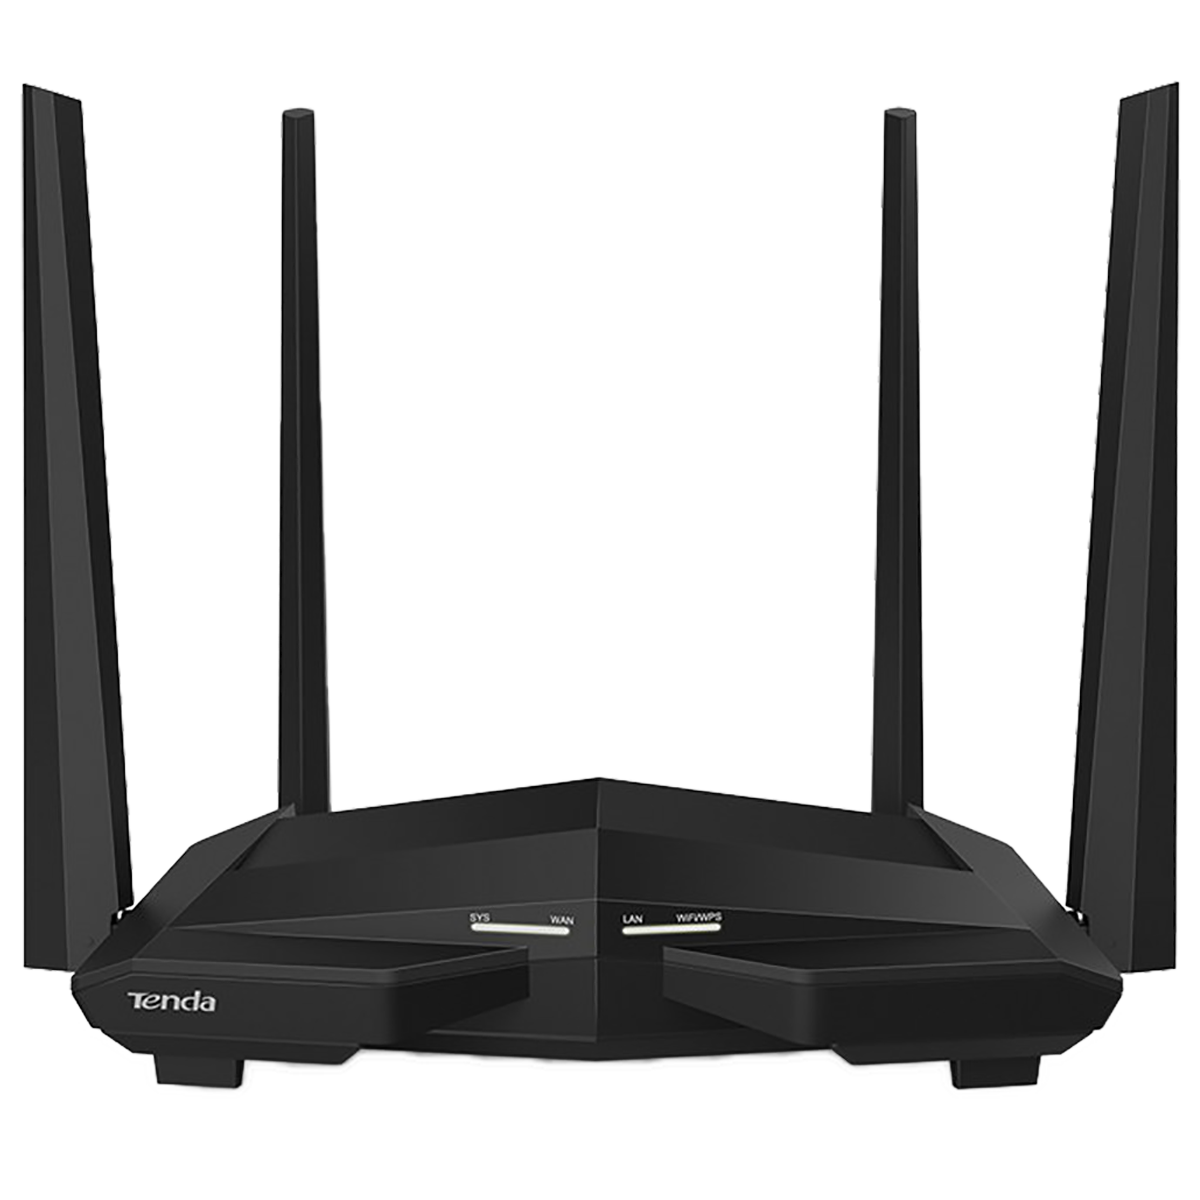 Tenda AC10 Dual Band 1167 Mbps WiFi Router (4 Antennas, 3 LAN Ports, Table Top, Black)